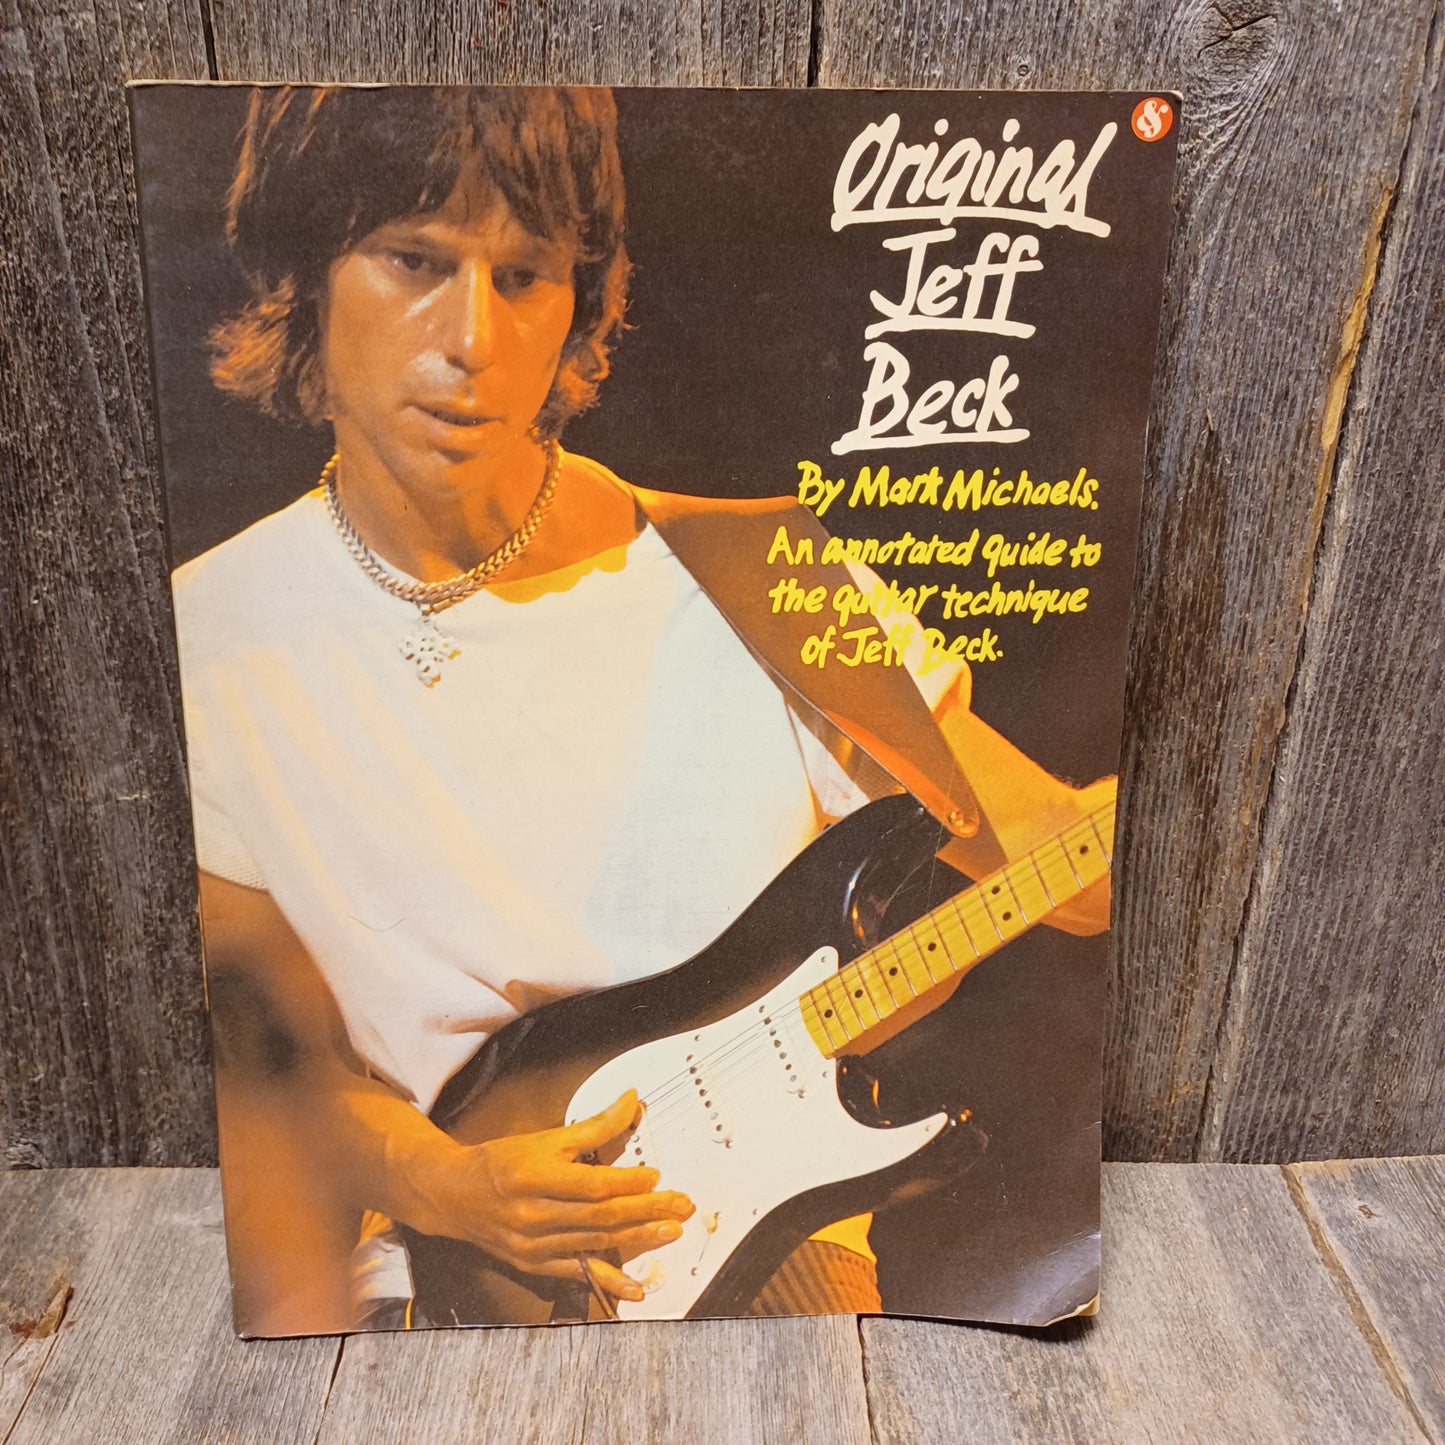 Original Jeff Beck Guitar method book